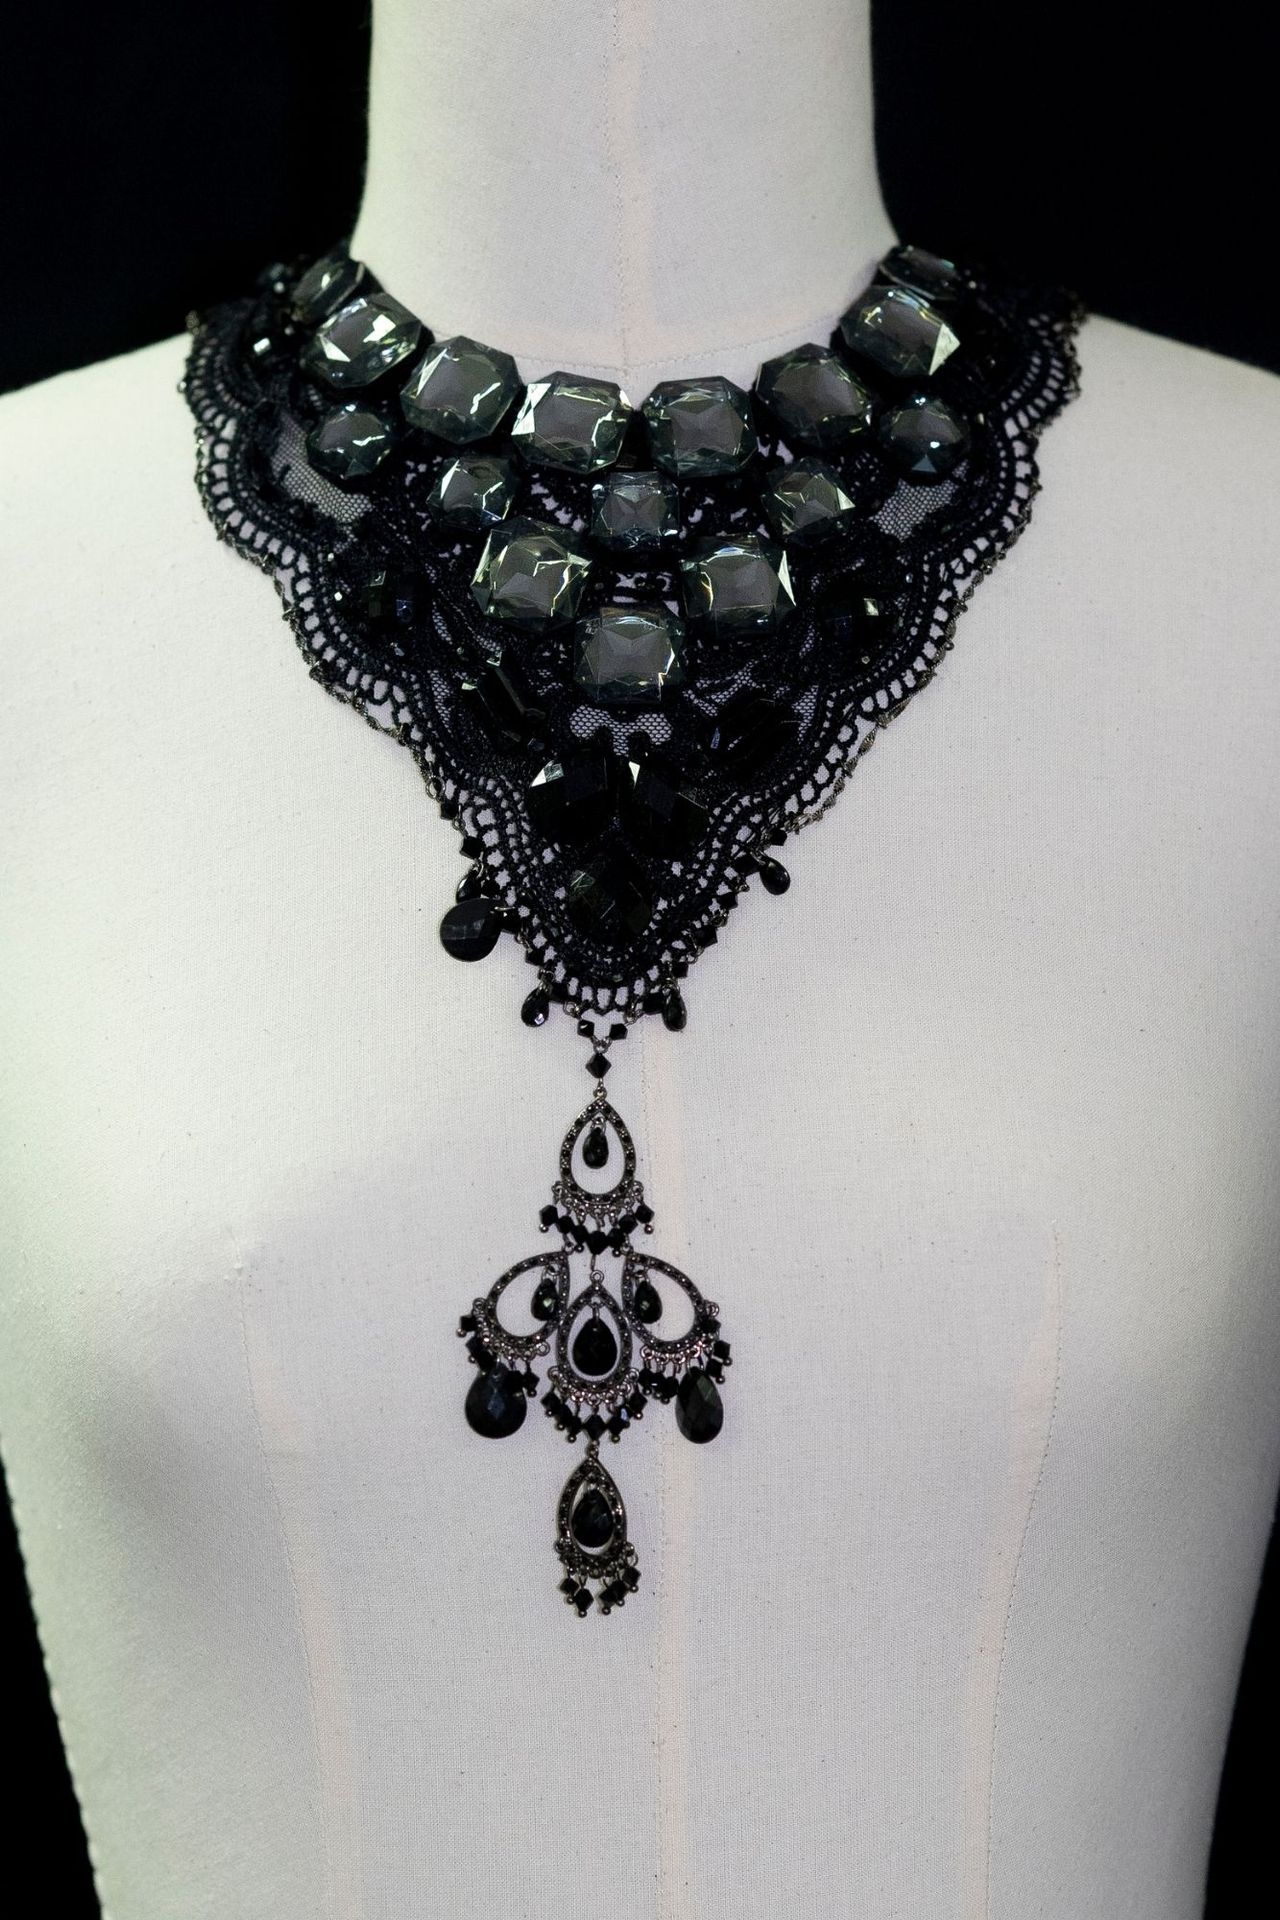 Collier "À fleur de peau" 灰色和黑色珠子吊坠的黑色蕾丝吊坠。